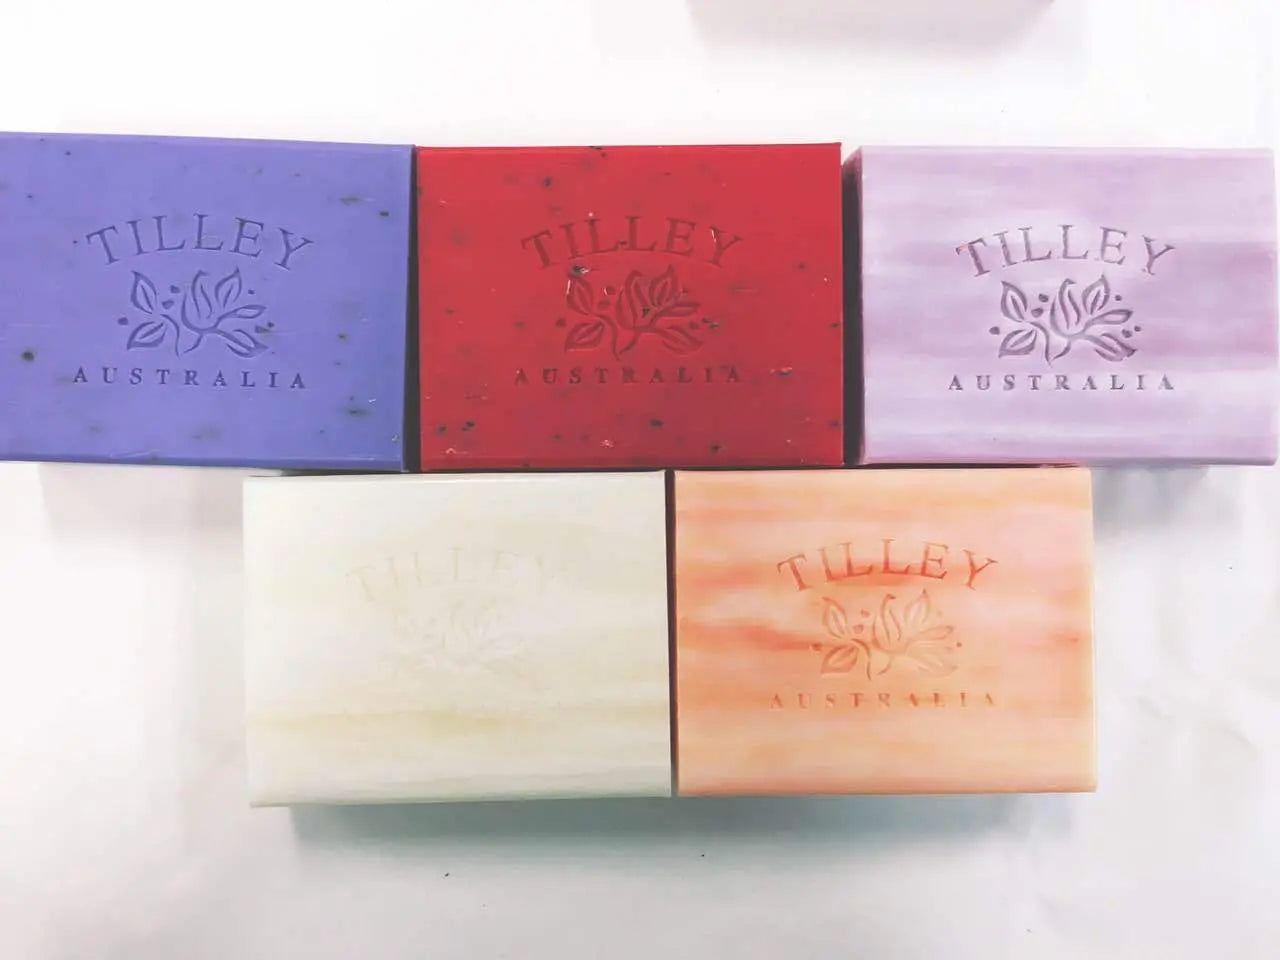 4 Pieces Tilley Soaps 100gm Tilley Australia Hand Made Natural Vegetable Soap Tilley